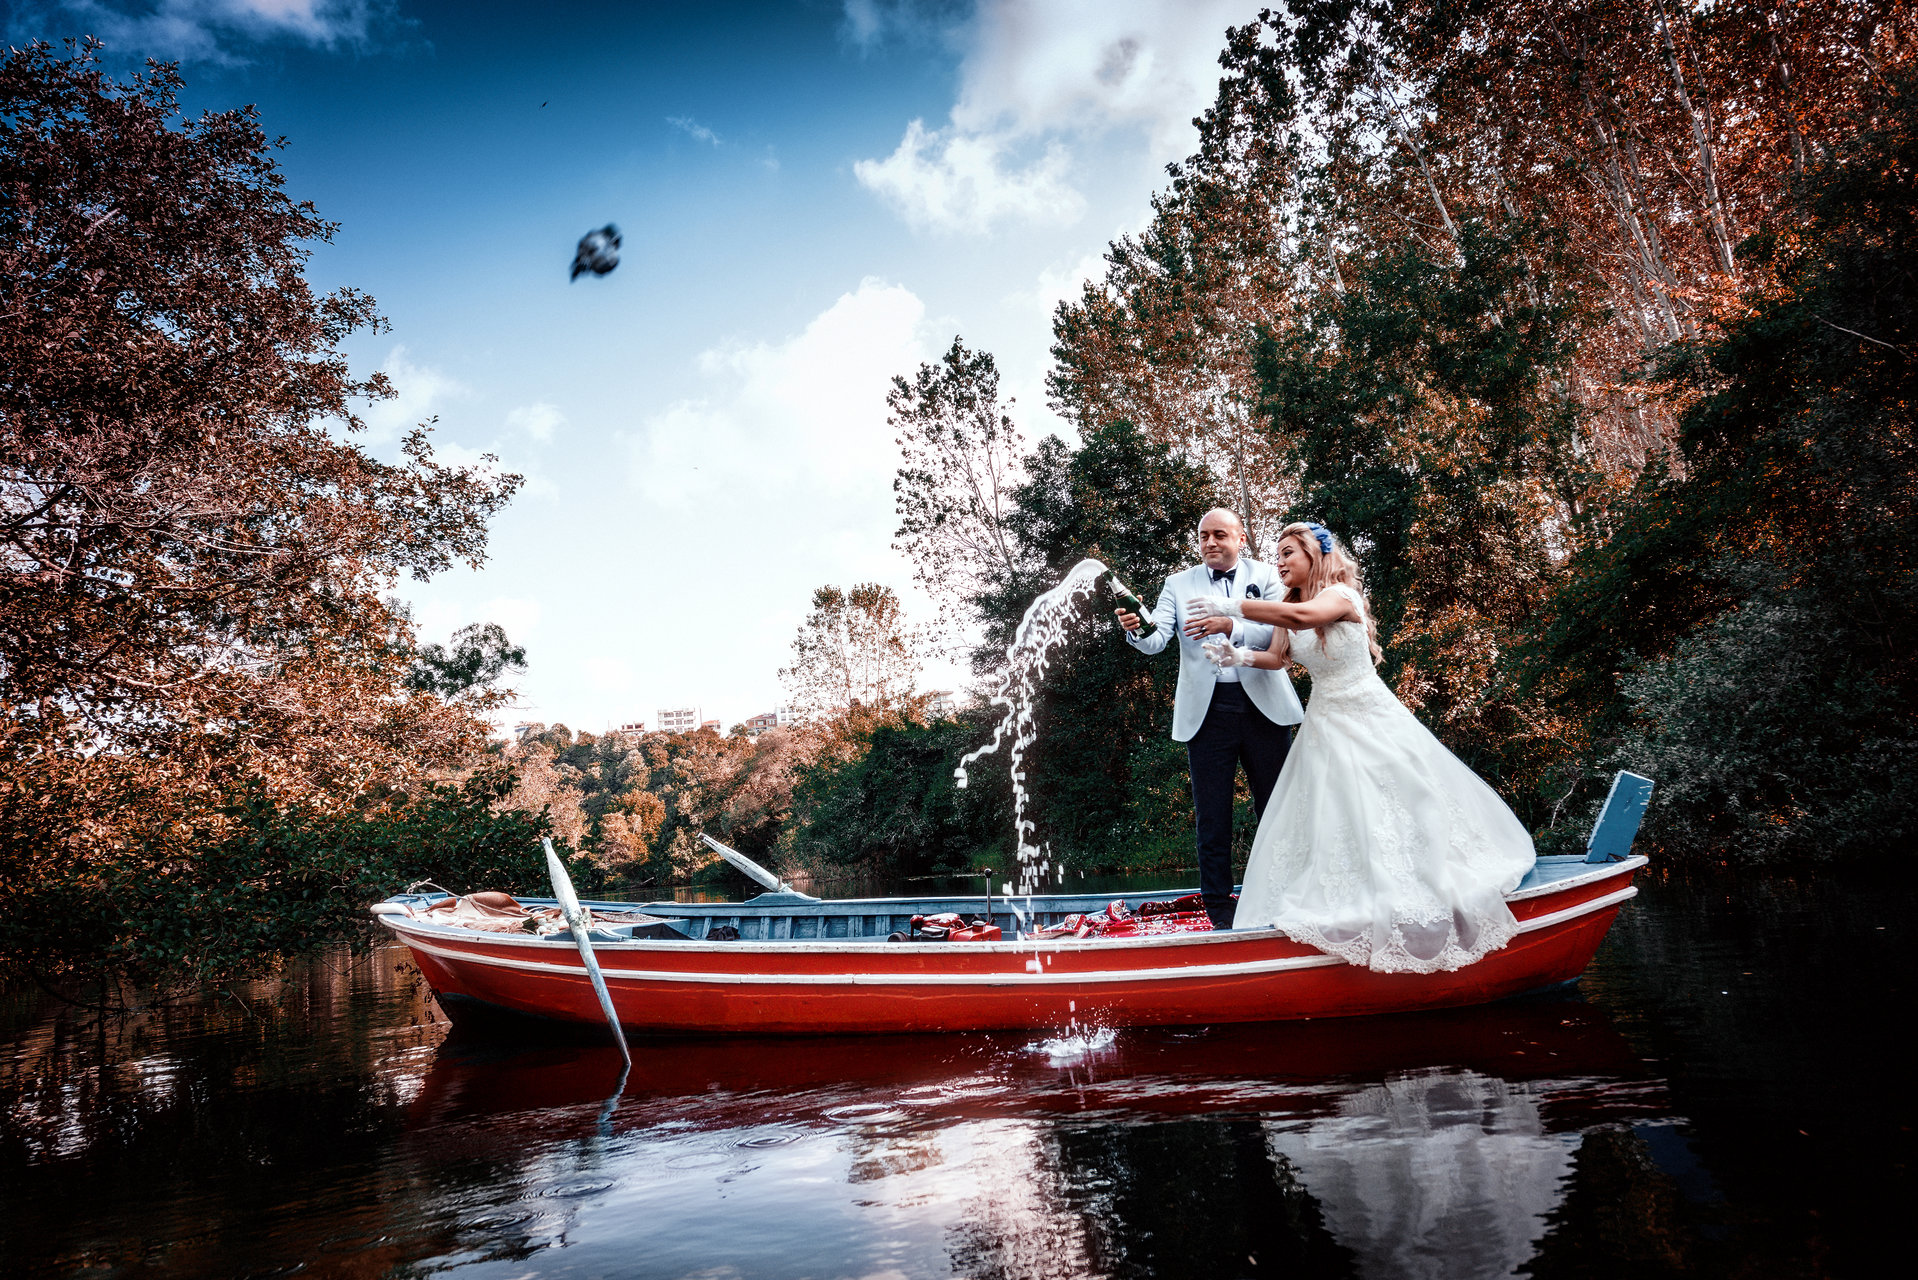  Boat ride with love от Nachko STOYANOV - poz_x